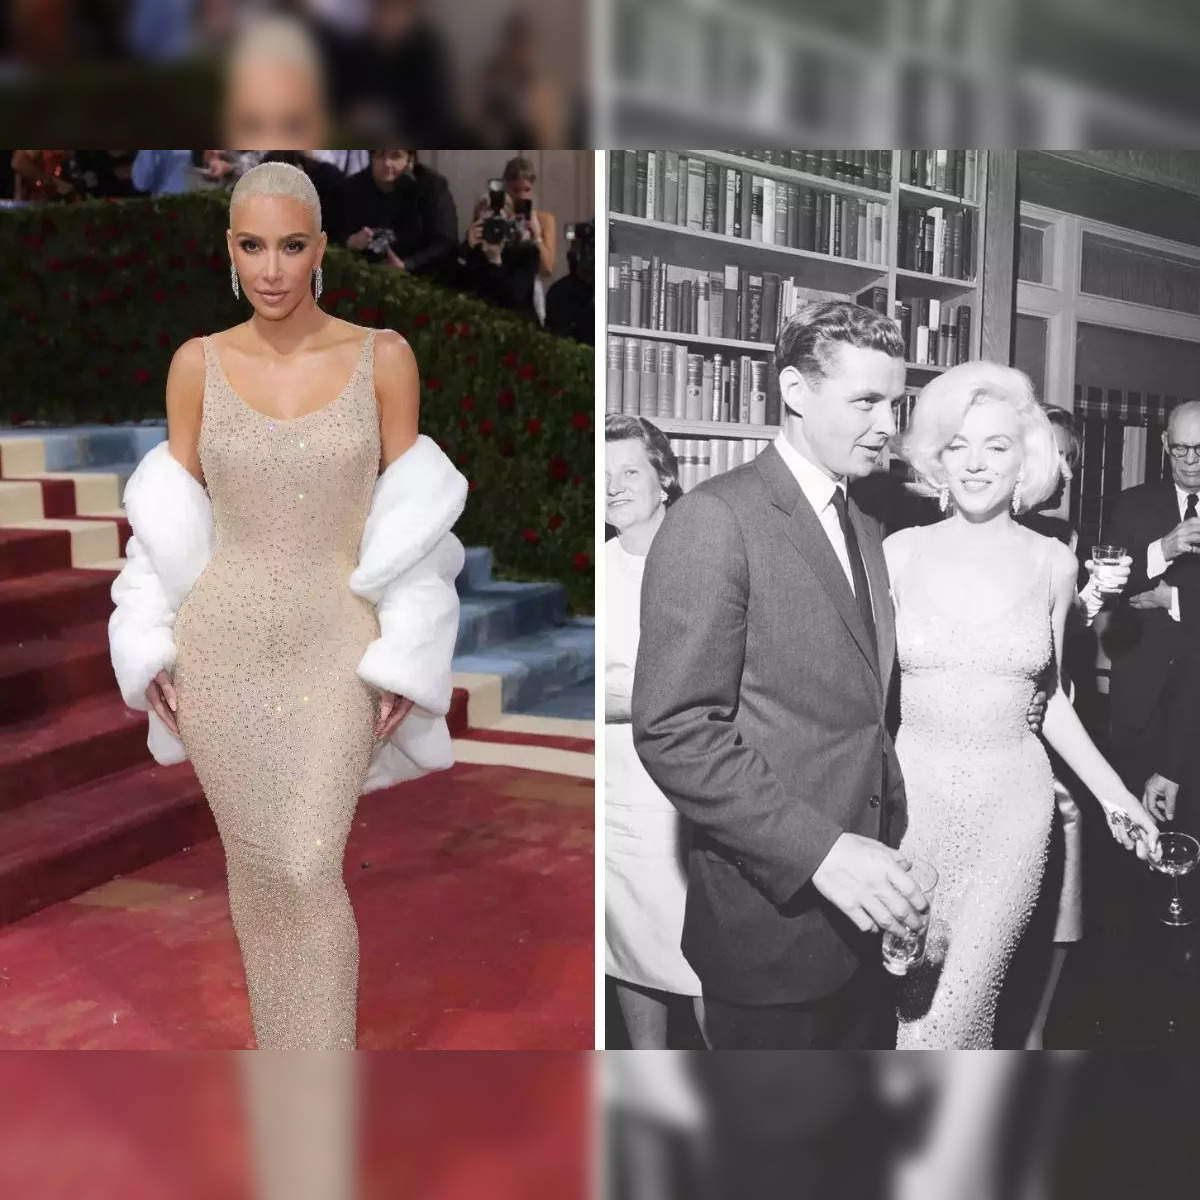 Marilyn Monroe iconic 'Happy Birthday' dress owner says Kim Kardashian did  not damage it at Met Gala - The Economic Times